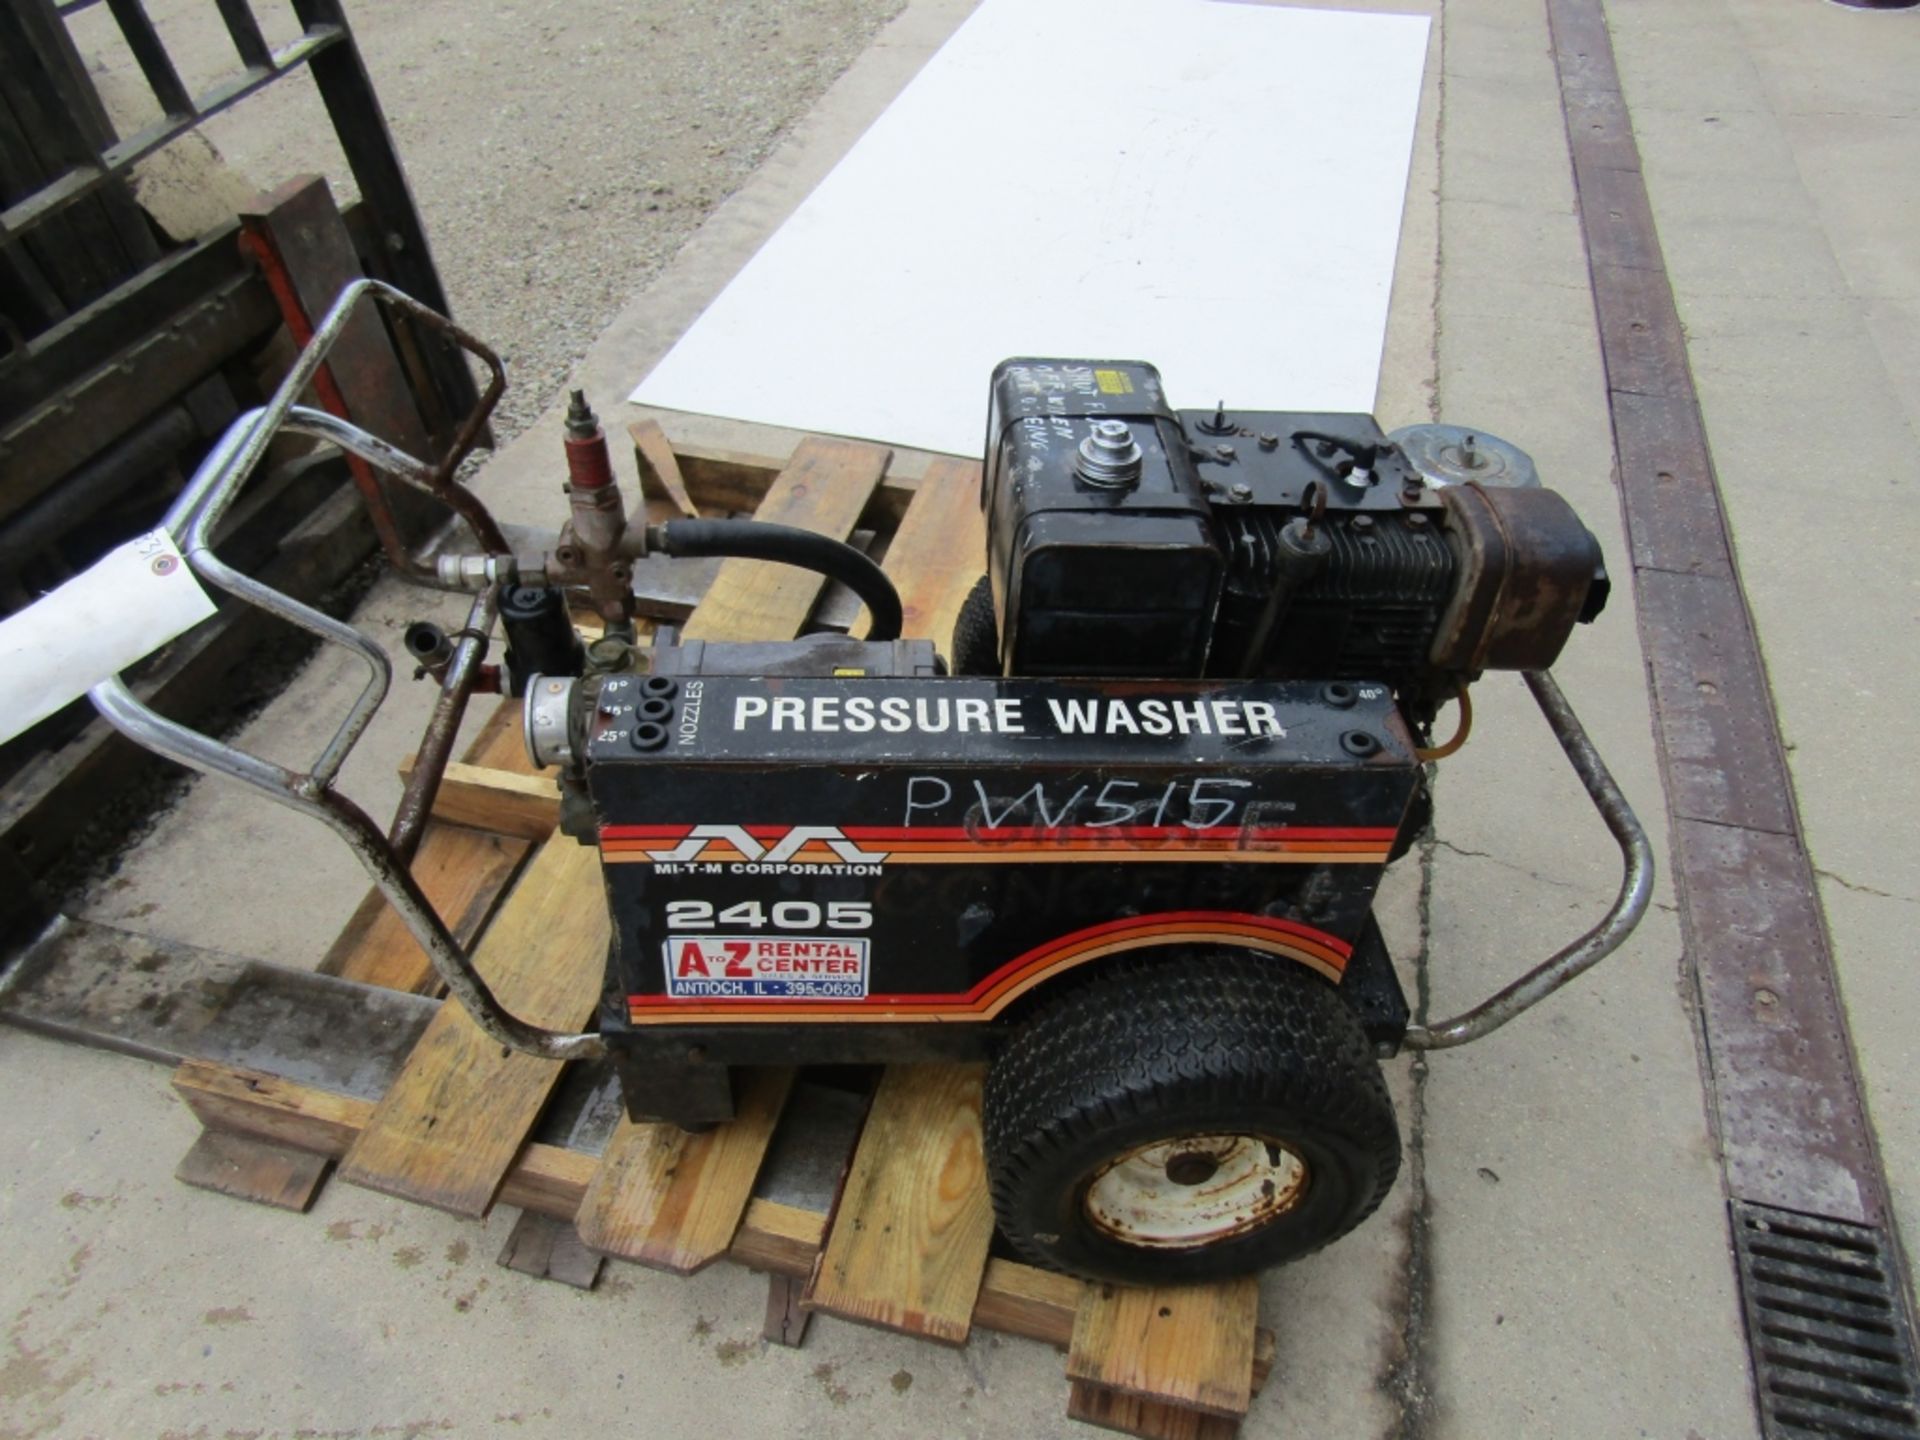 Mi-T-M Pressure Washer 2405, Model 2405, 11 hp Motor